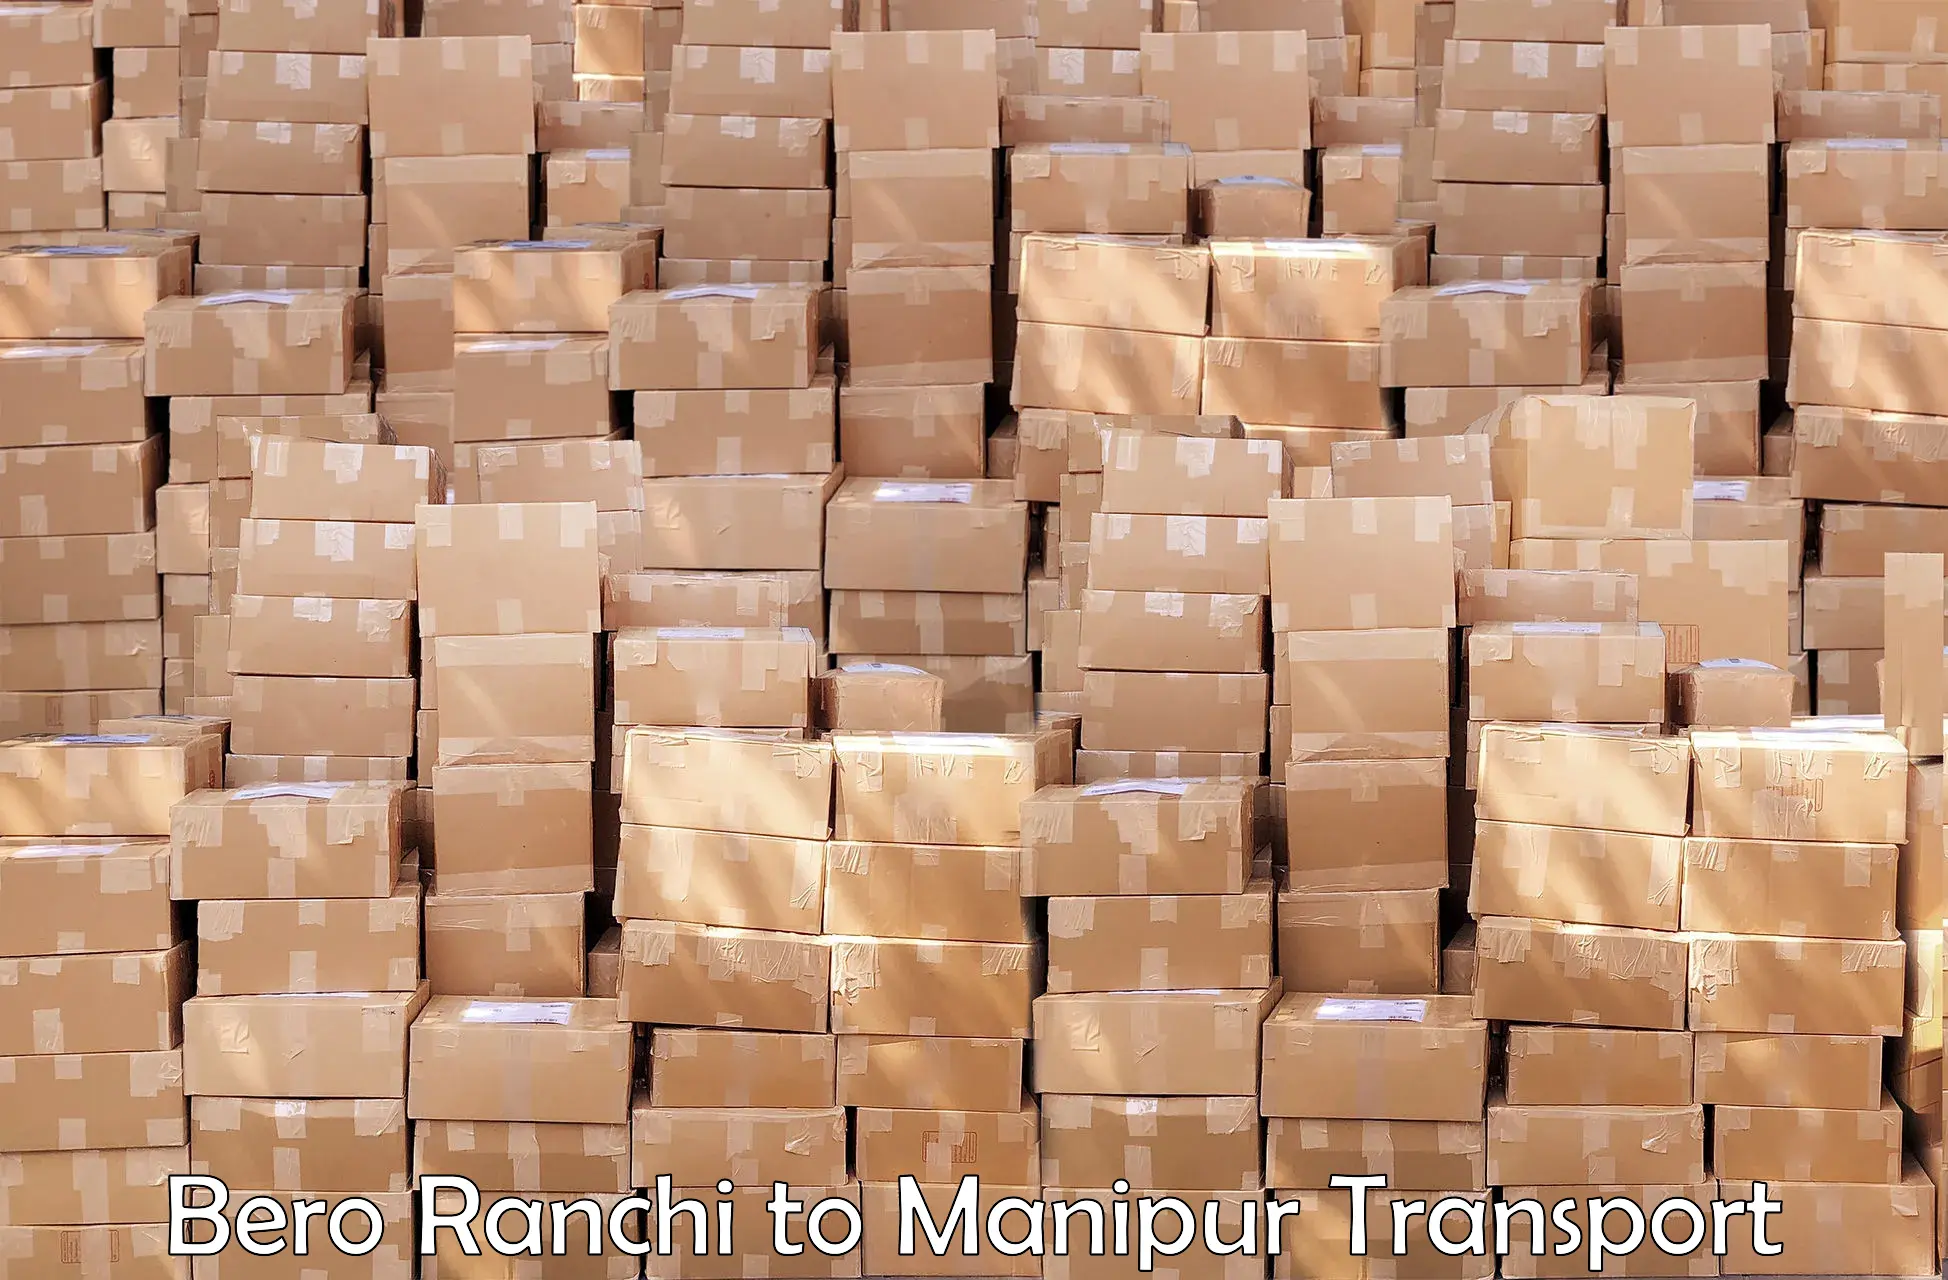 Transport in sharing Bero Ranchi to Kanti